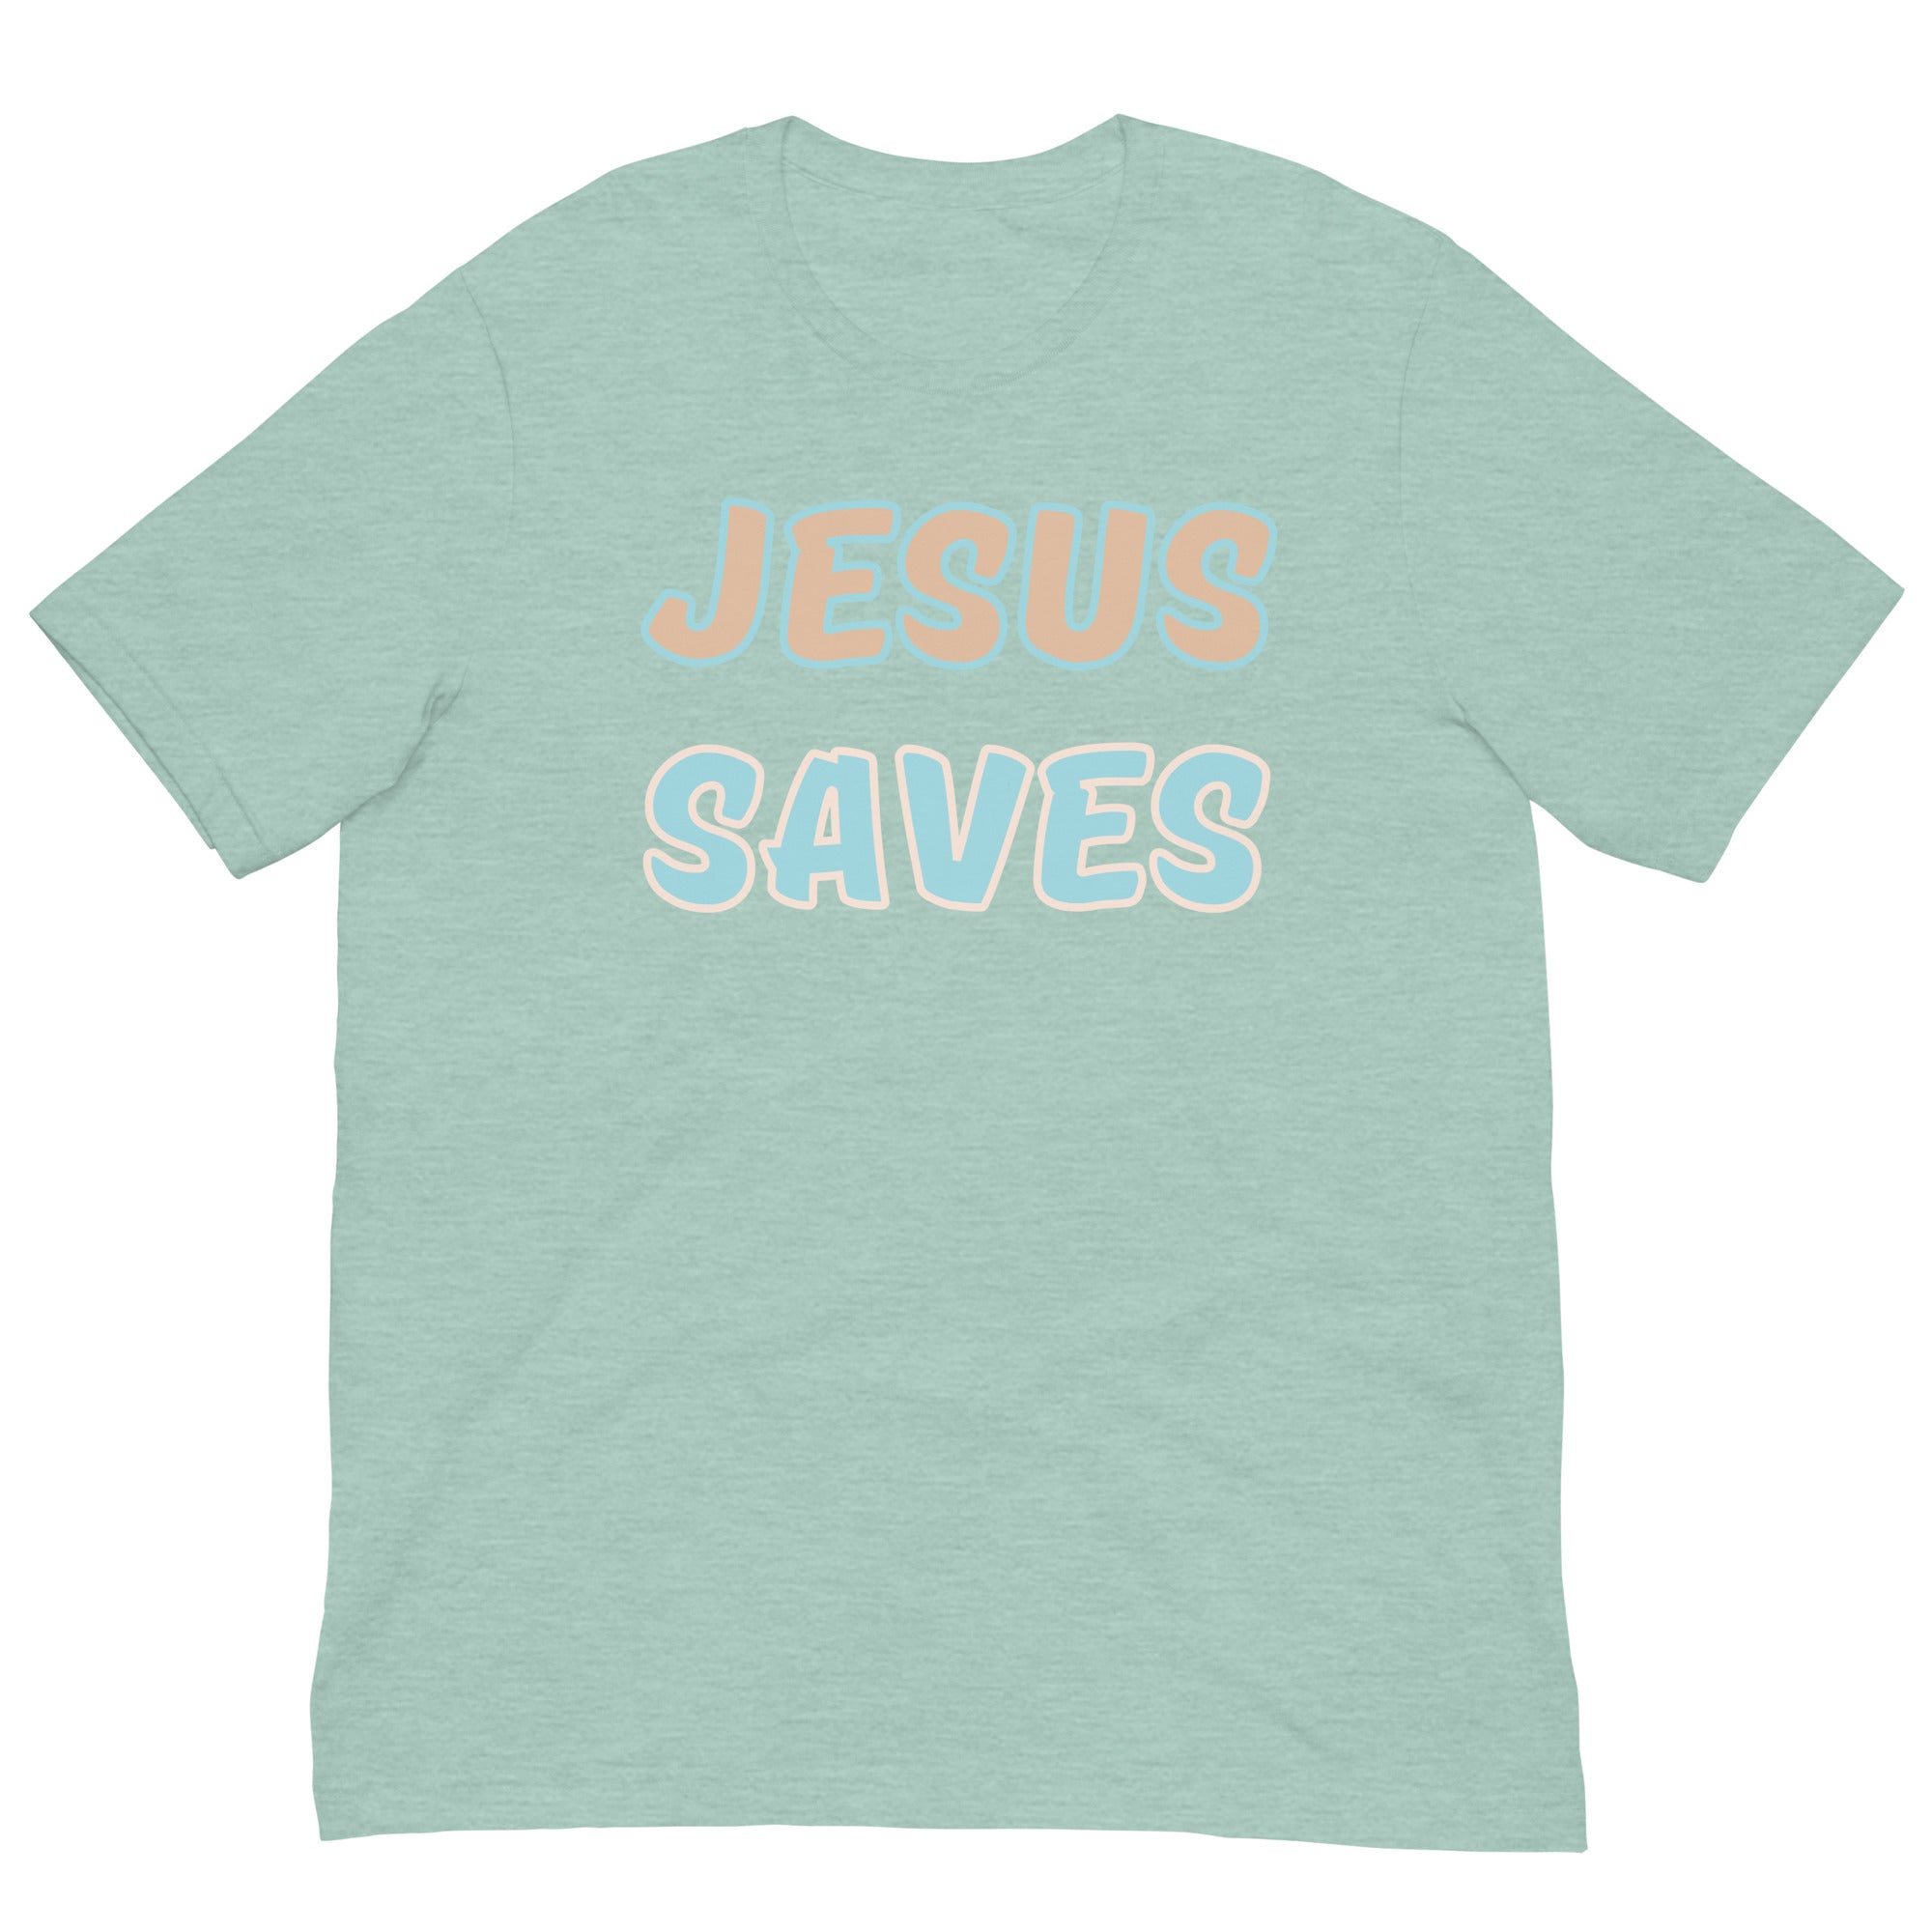 JESUS SAVES Unisex t-shirt